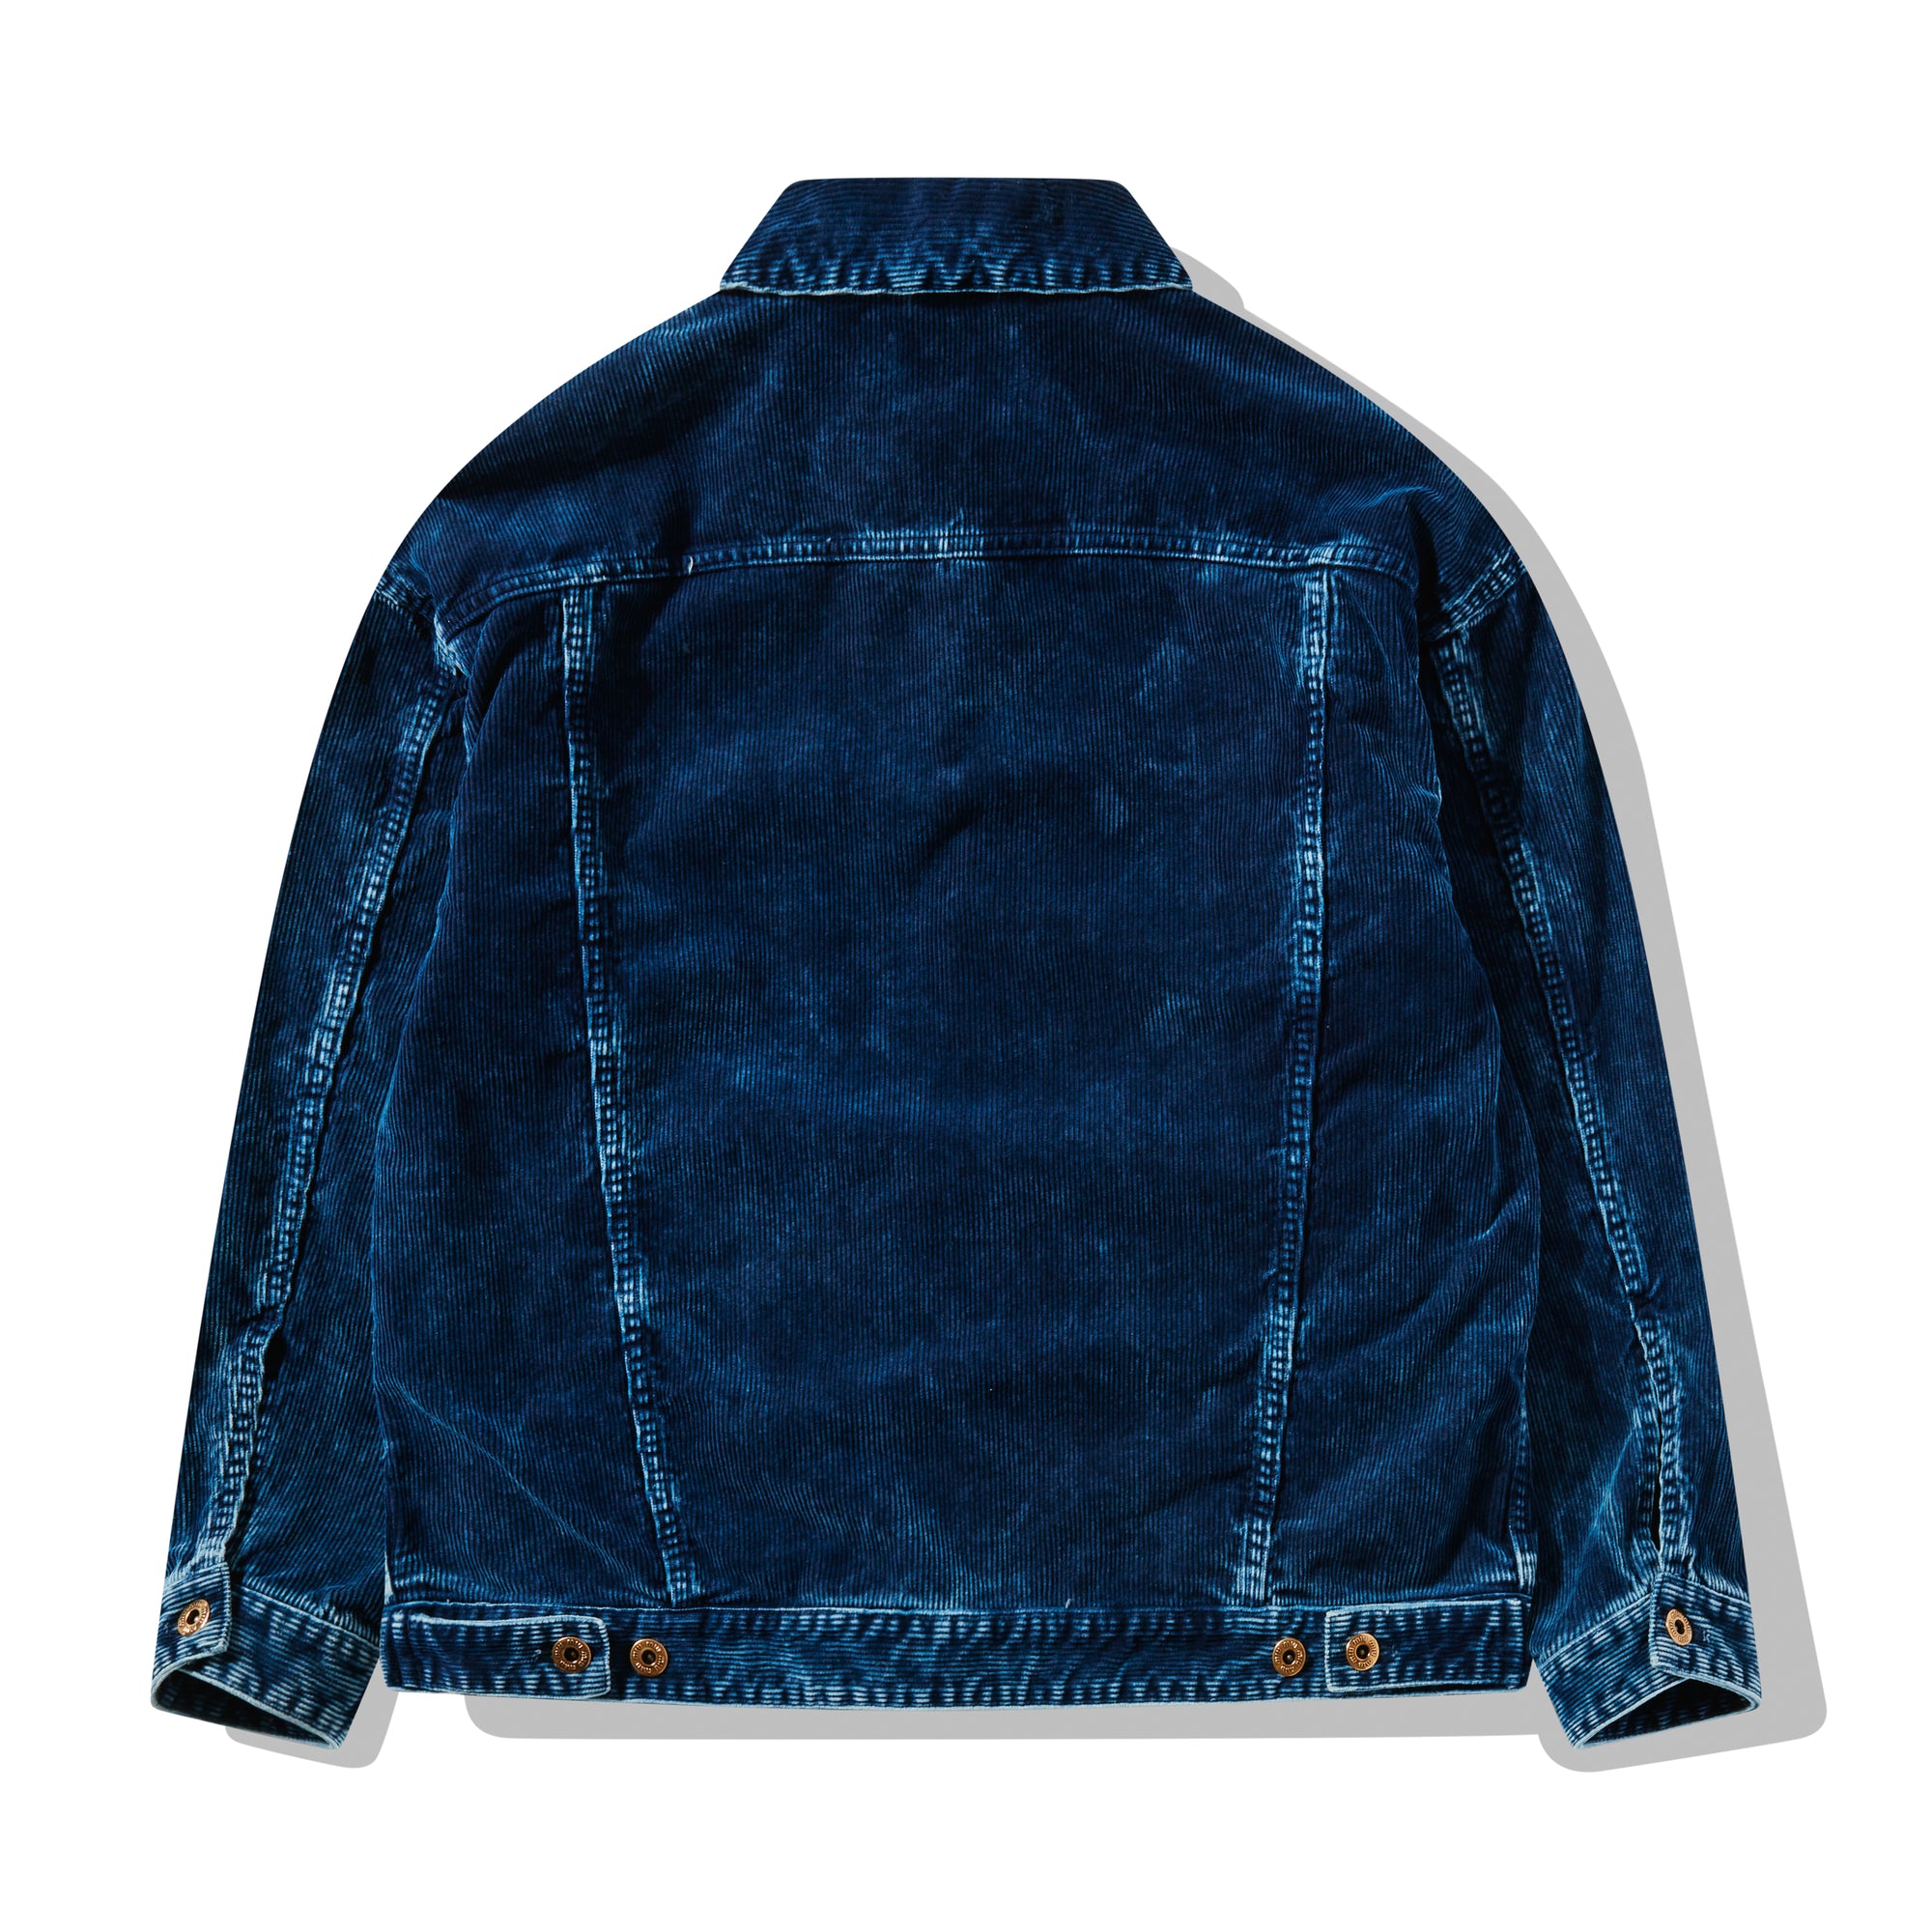 Miu Miu - Women's Washed Velvet Blouson Jacket - (Indigo Blue) view 2